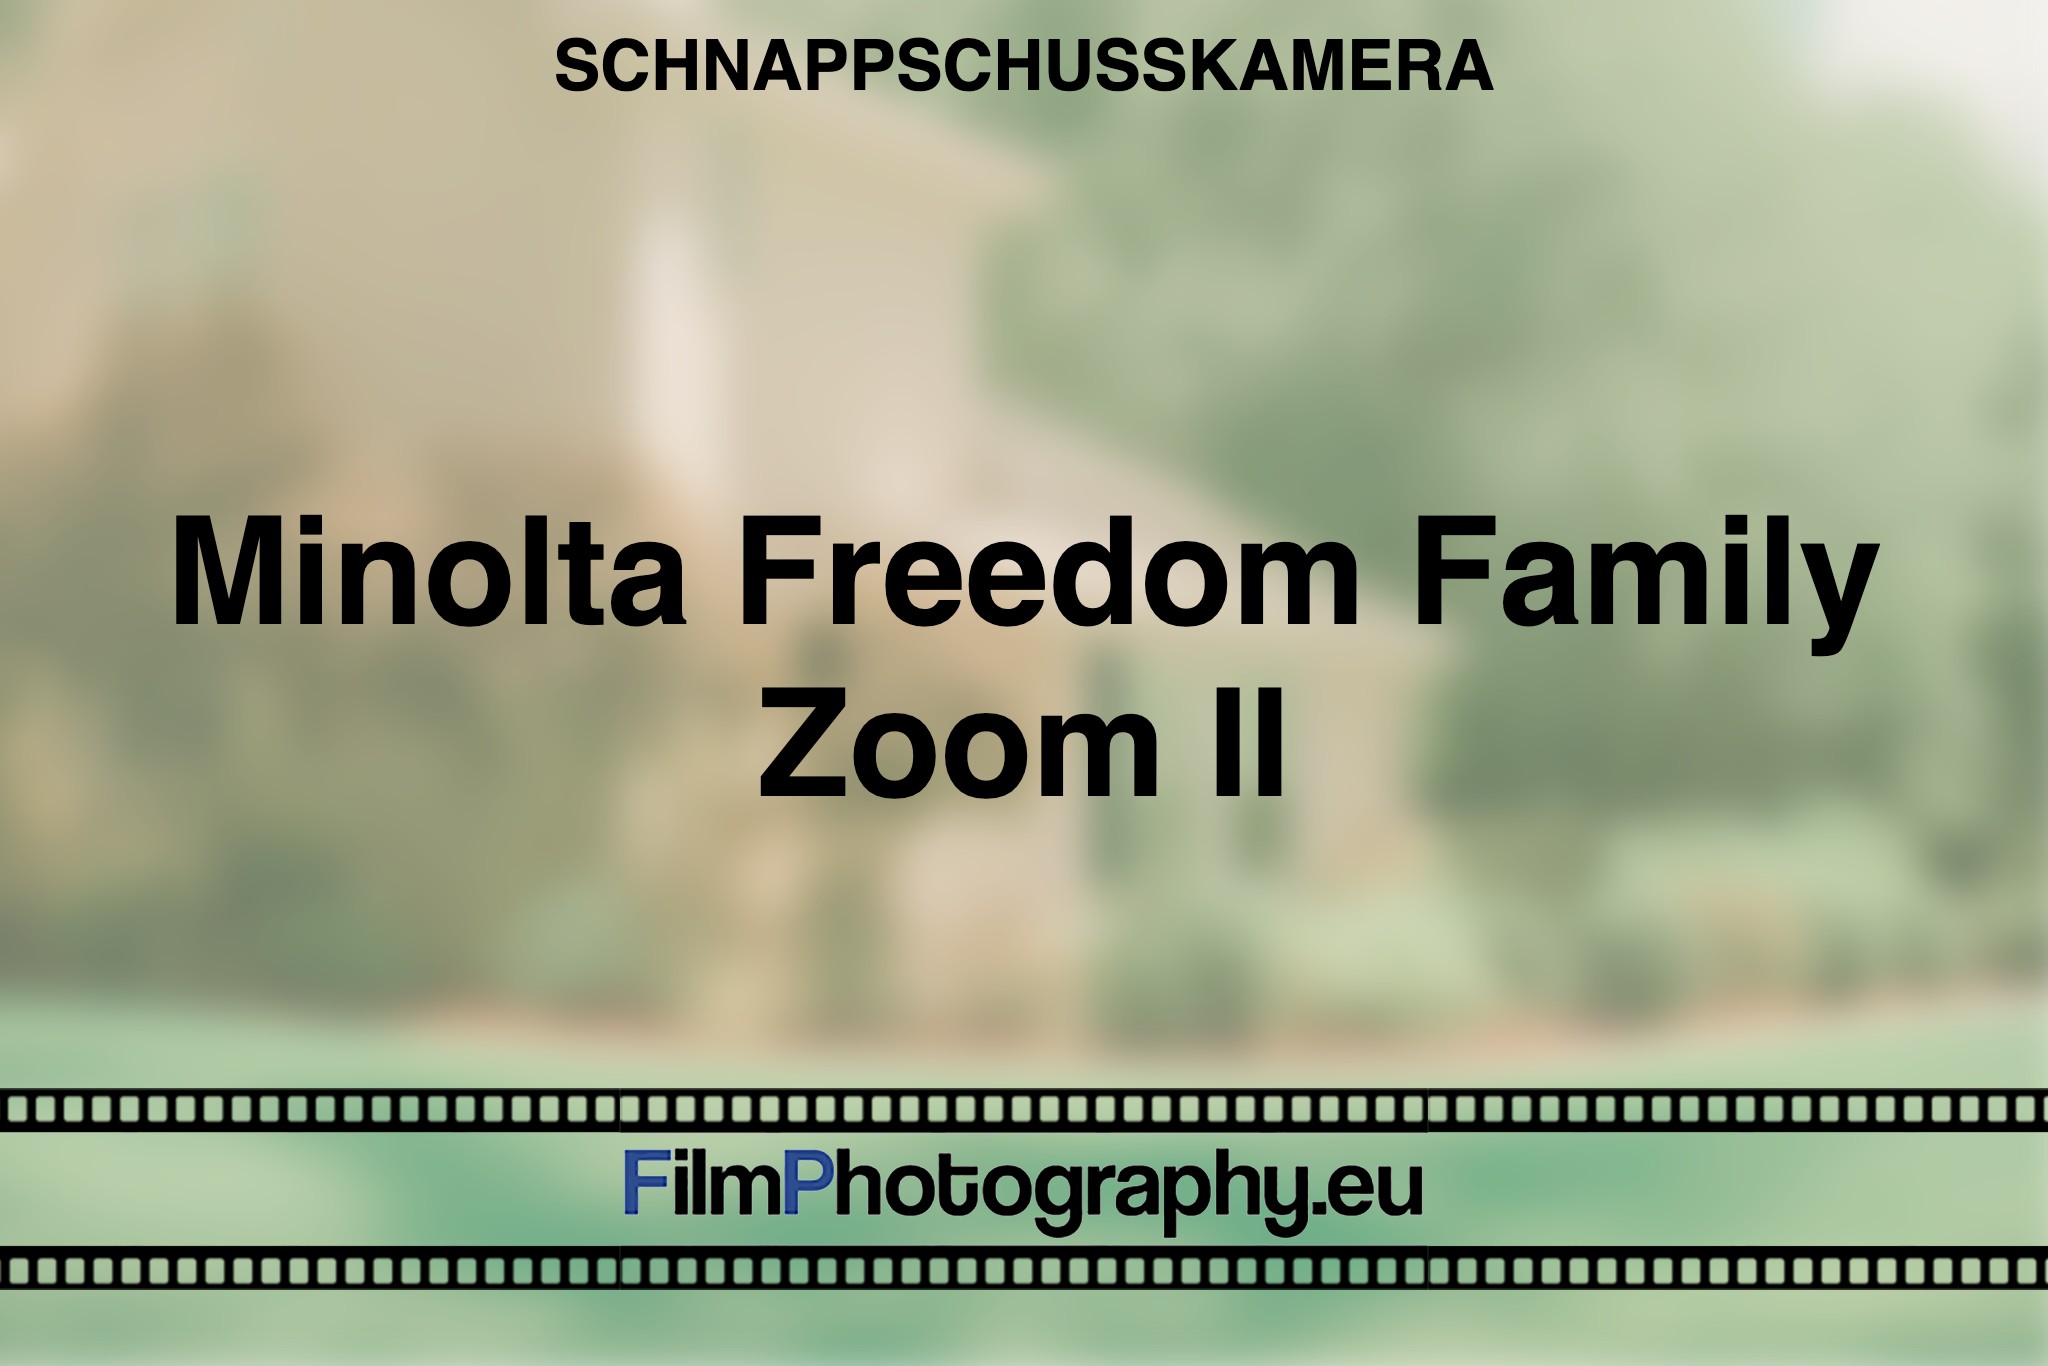 minolta-freedom-family-zoom-ii-schnappschusskamera-bnv